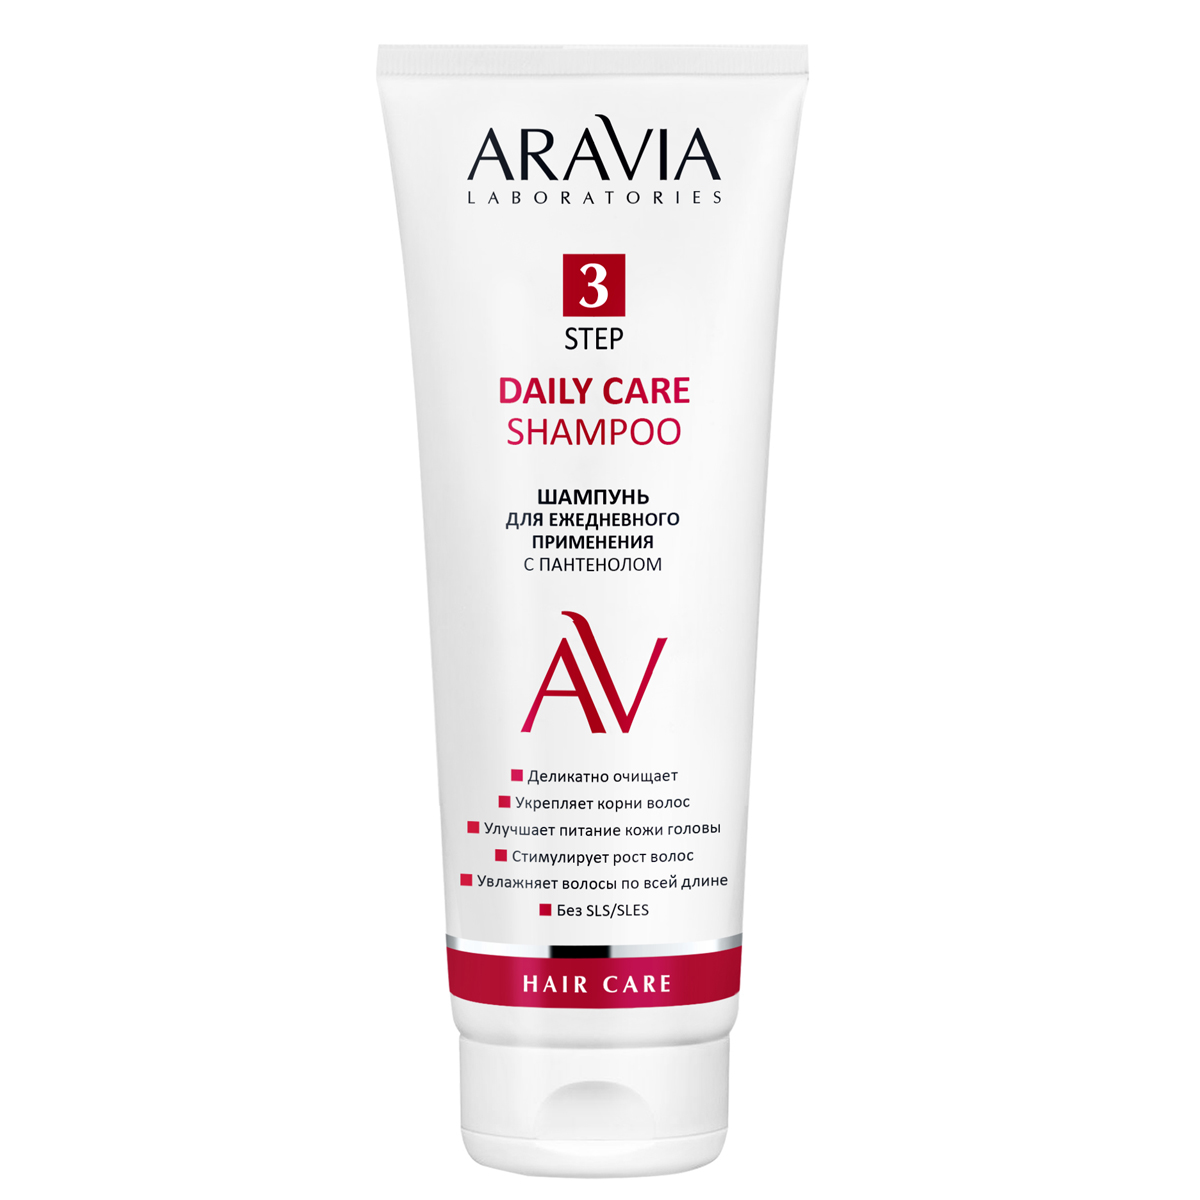 Aravia Laboratories Шампунь для ежедневного применения с пантенолом Daily Care Shampoo, 250 мл (Aravia Laboratories, Уход за волосами)